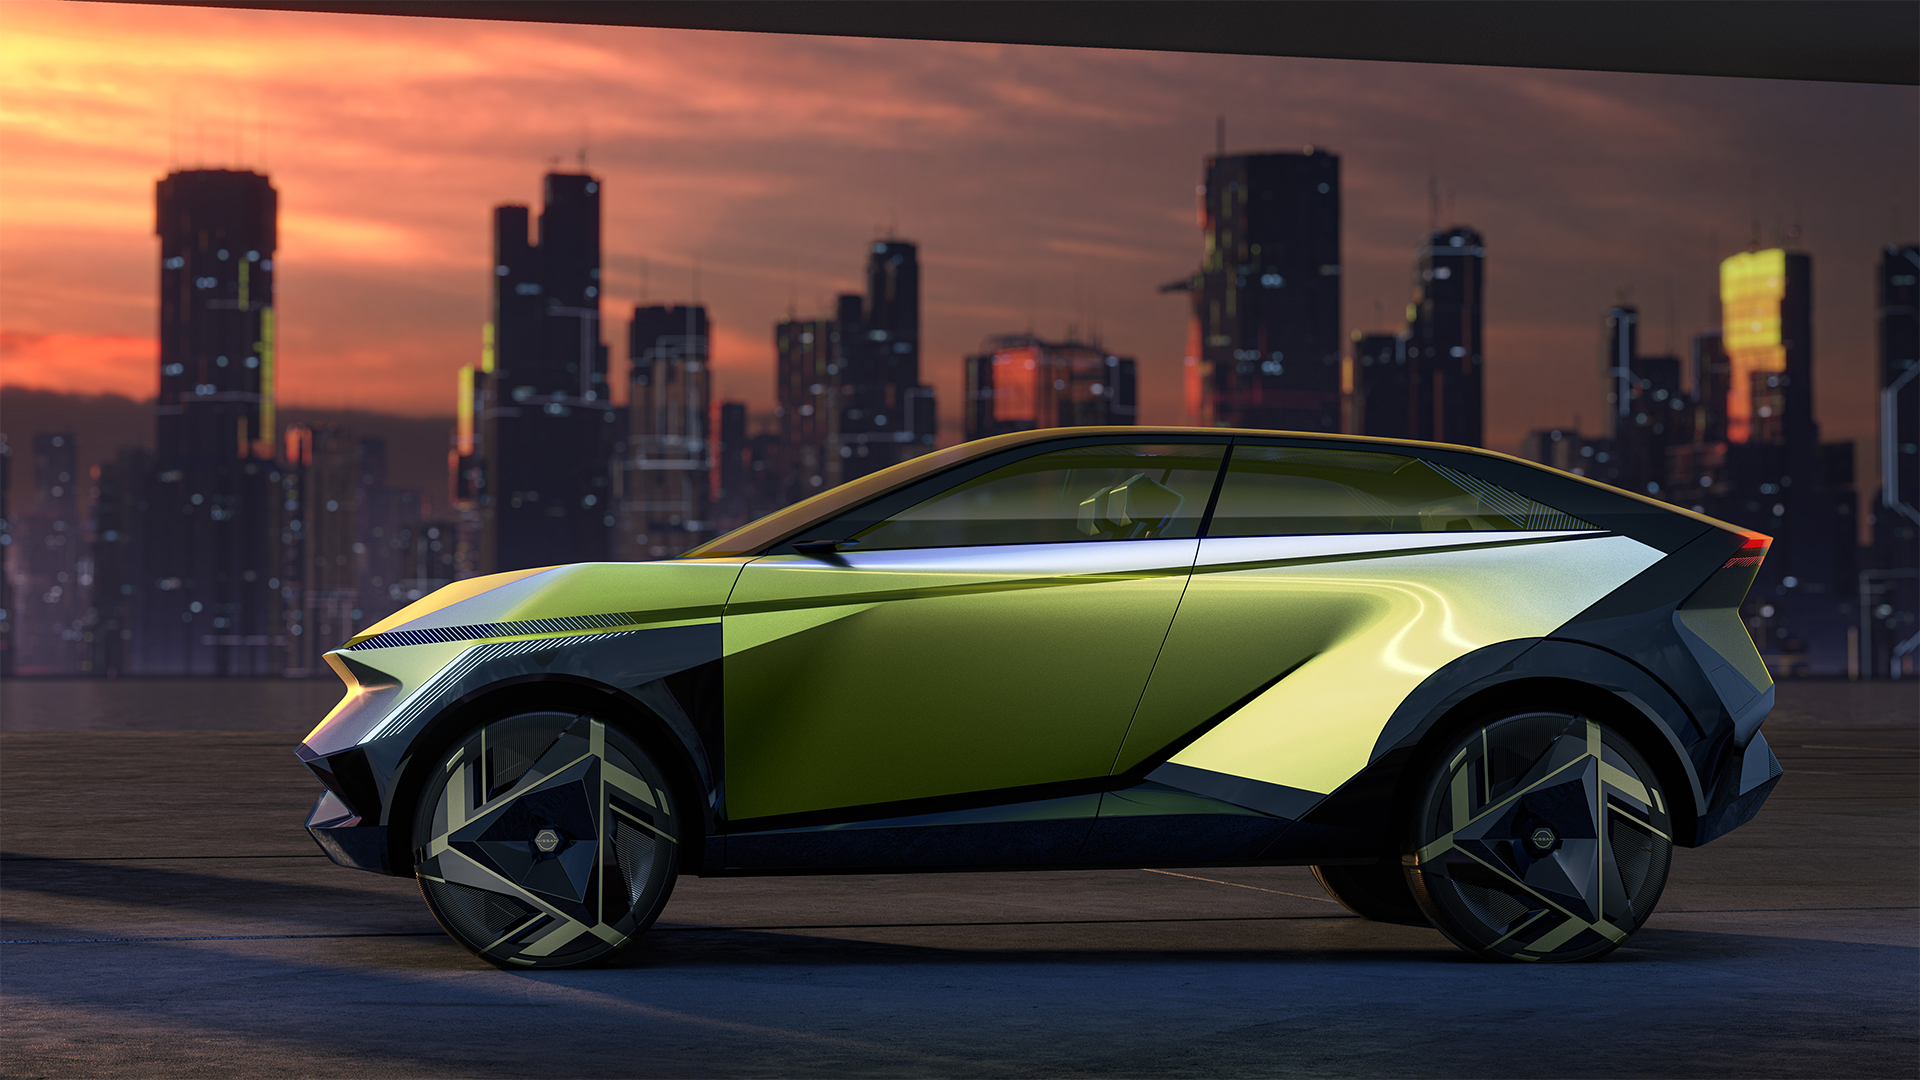 Nissan hints at radically angular design future with Hyper Urban